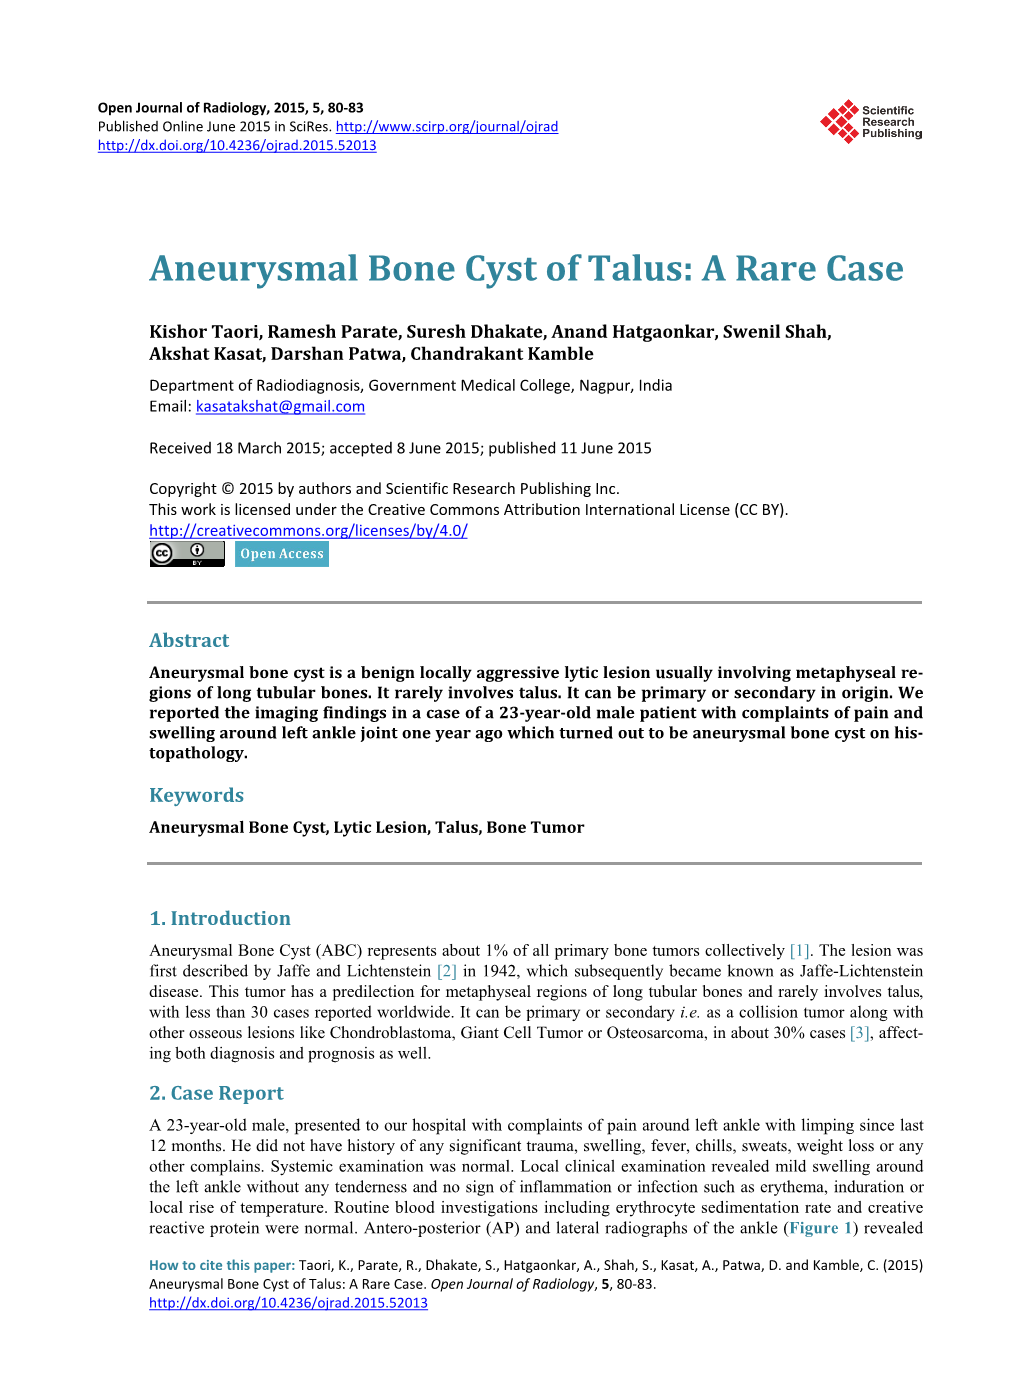 Aneurysmal Bone Cyst of Talus: a Rare Case